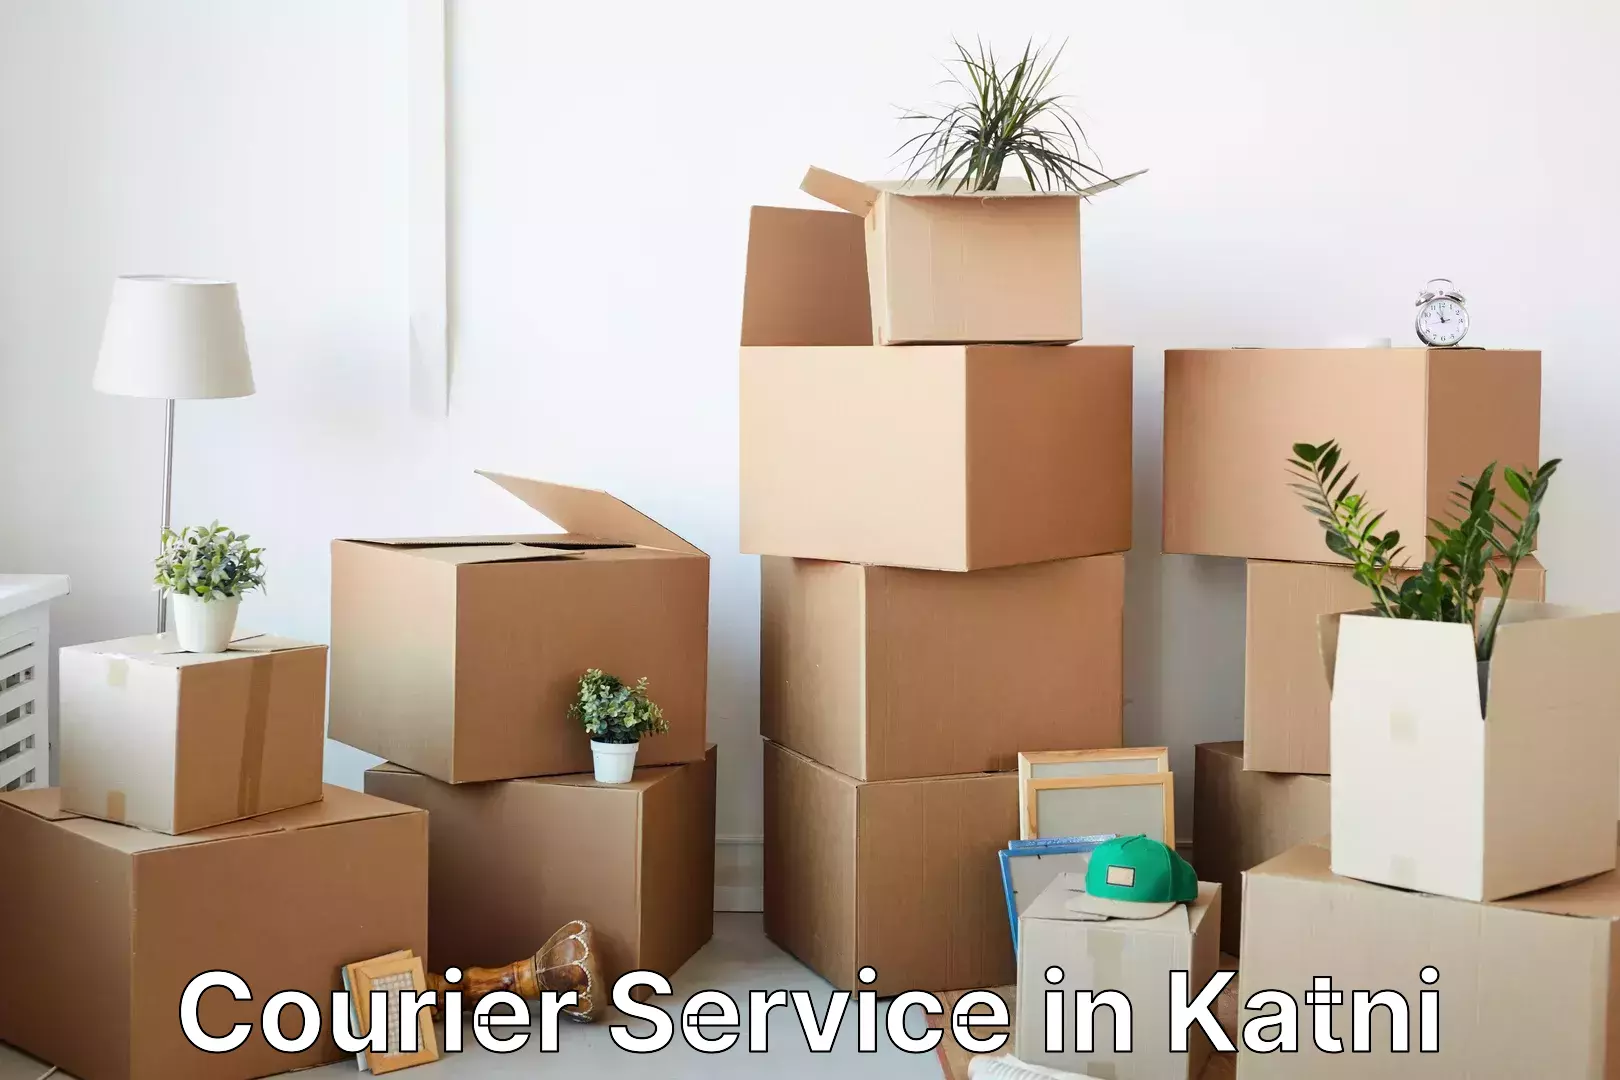 High-performance logistics in Katni